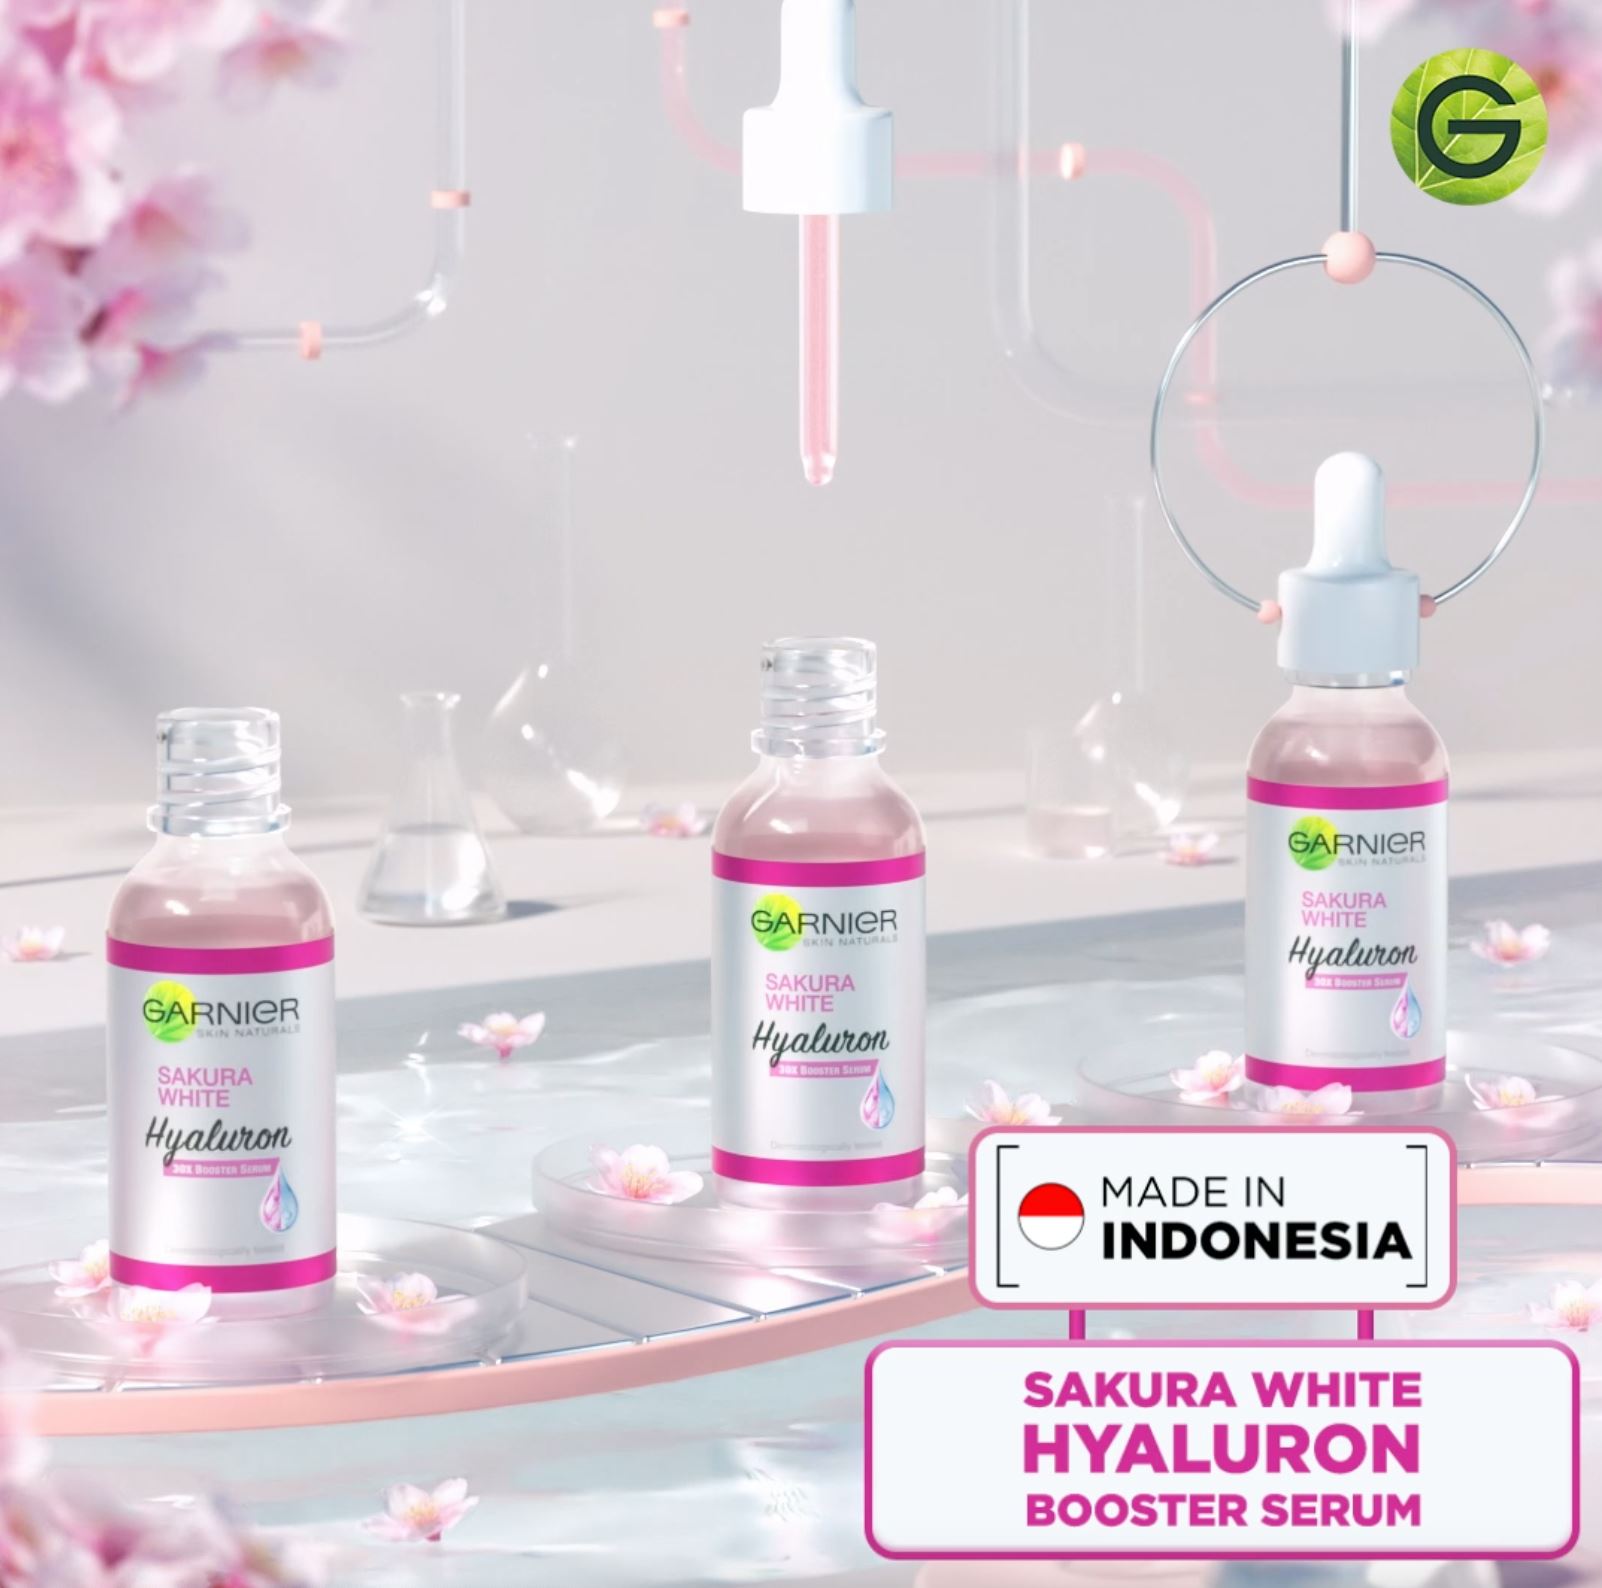 Garnier Sakura Glow Hyaluron 30x Booster Serum